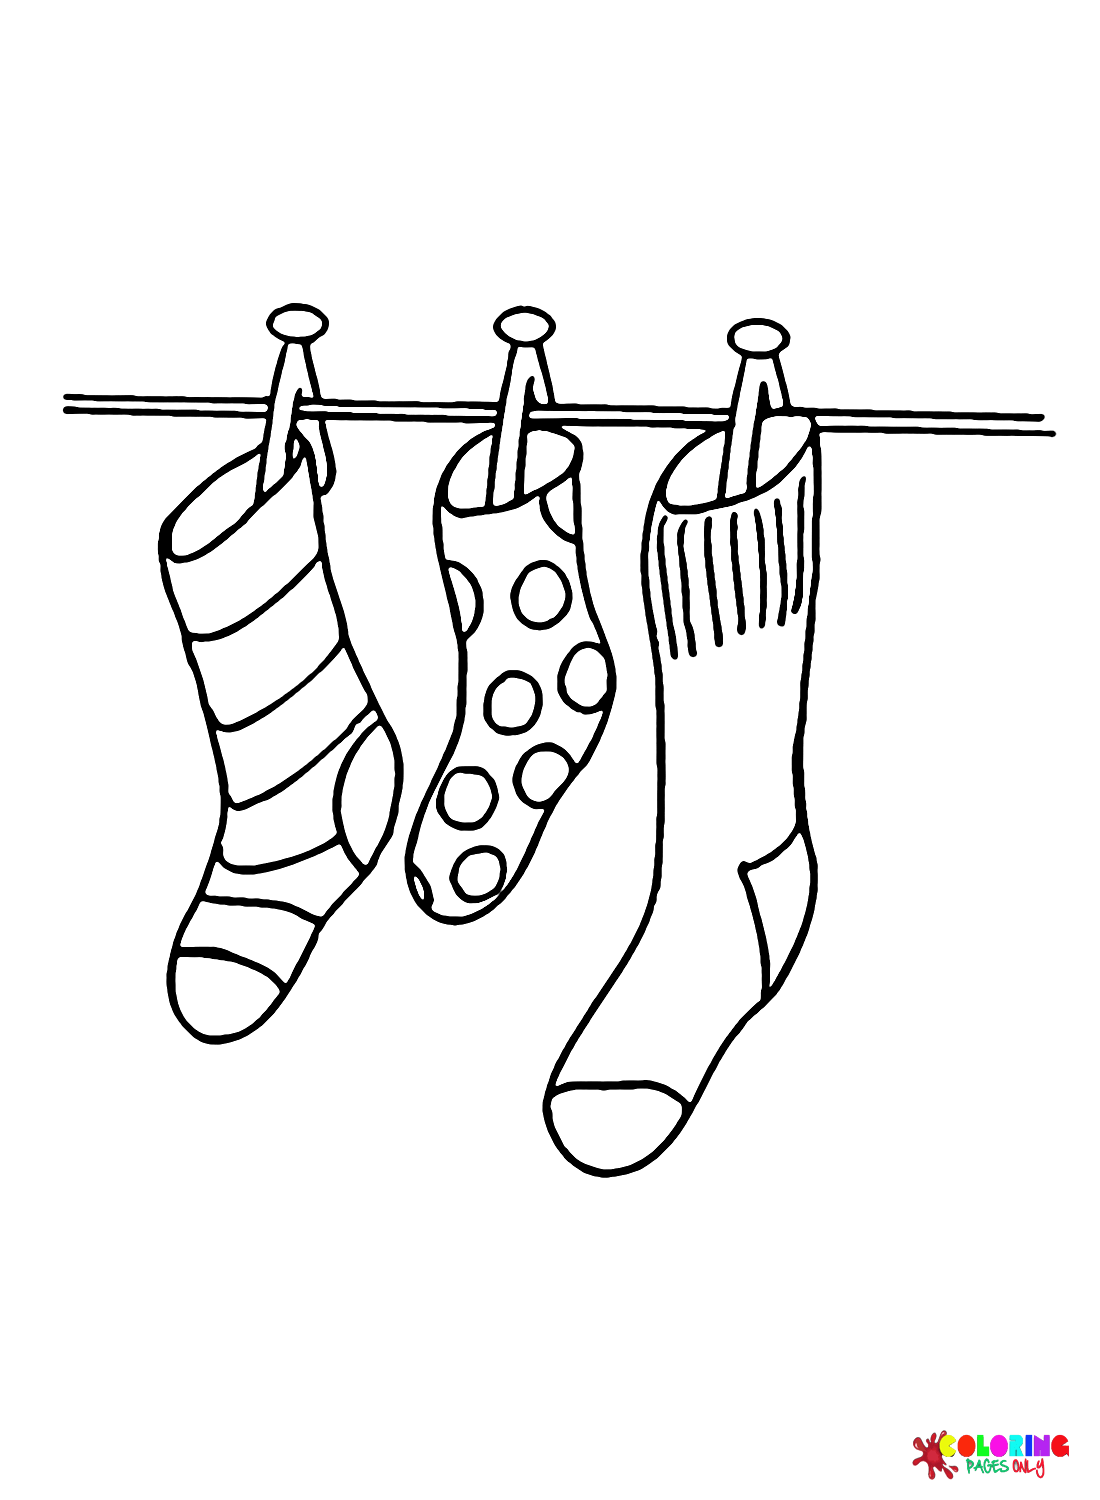 Socks Hanging from Socks